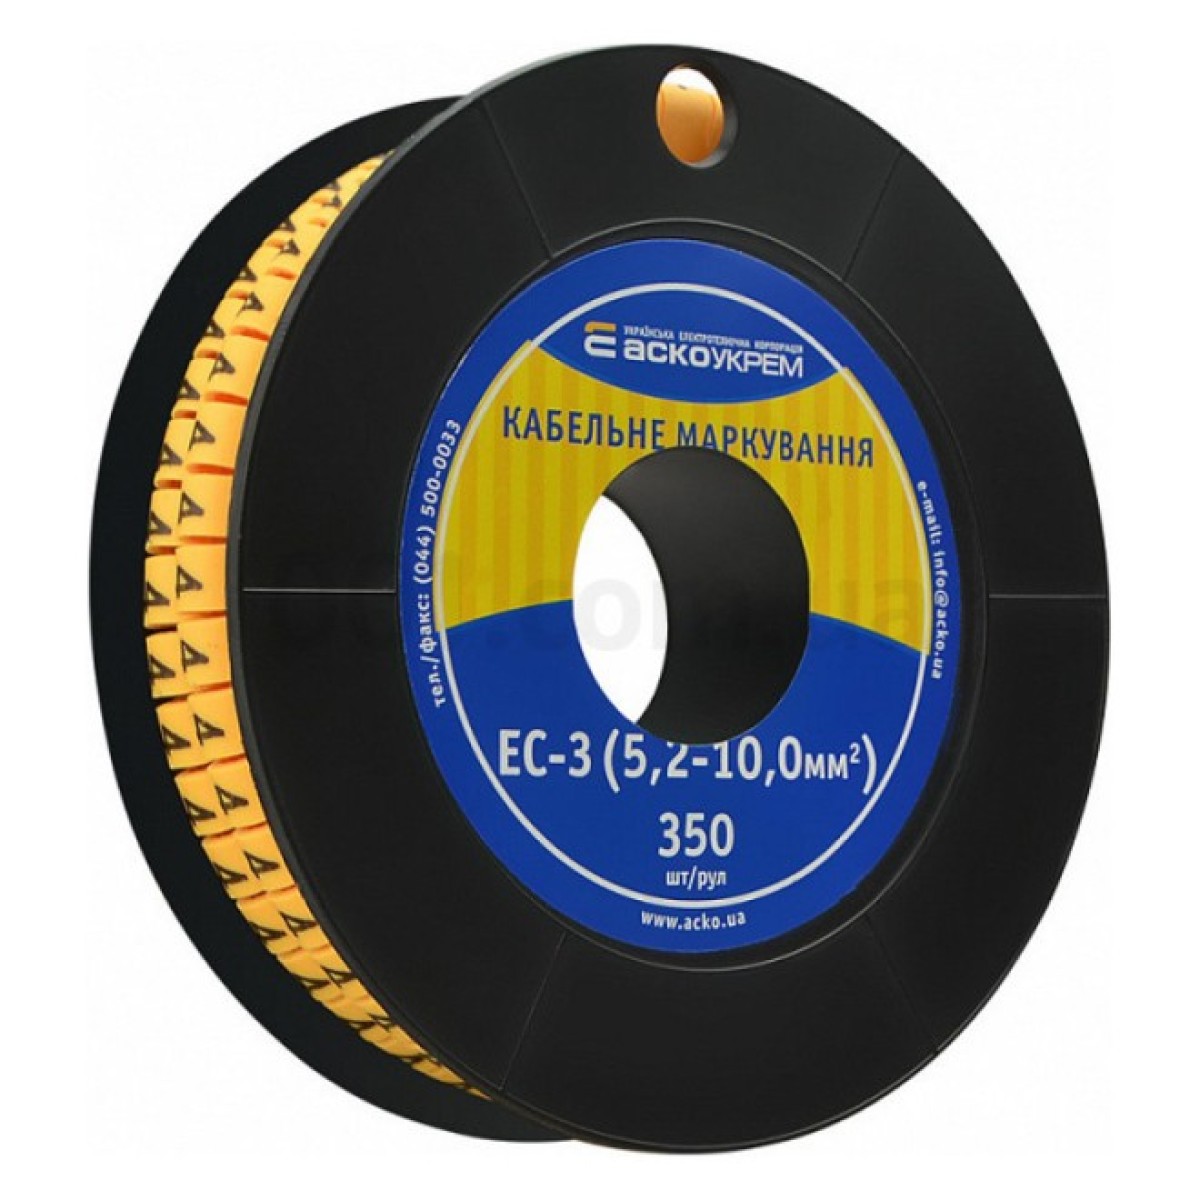 Маркировка EC-3 для кабеля 5,2-10,0 мм² символ «4» (рулон 250 шт.), АСКО-УКРЕМ 98_98.jpg - фото 1